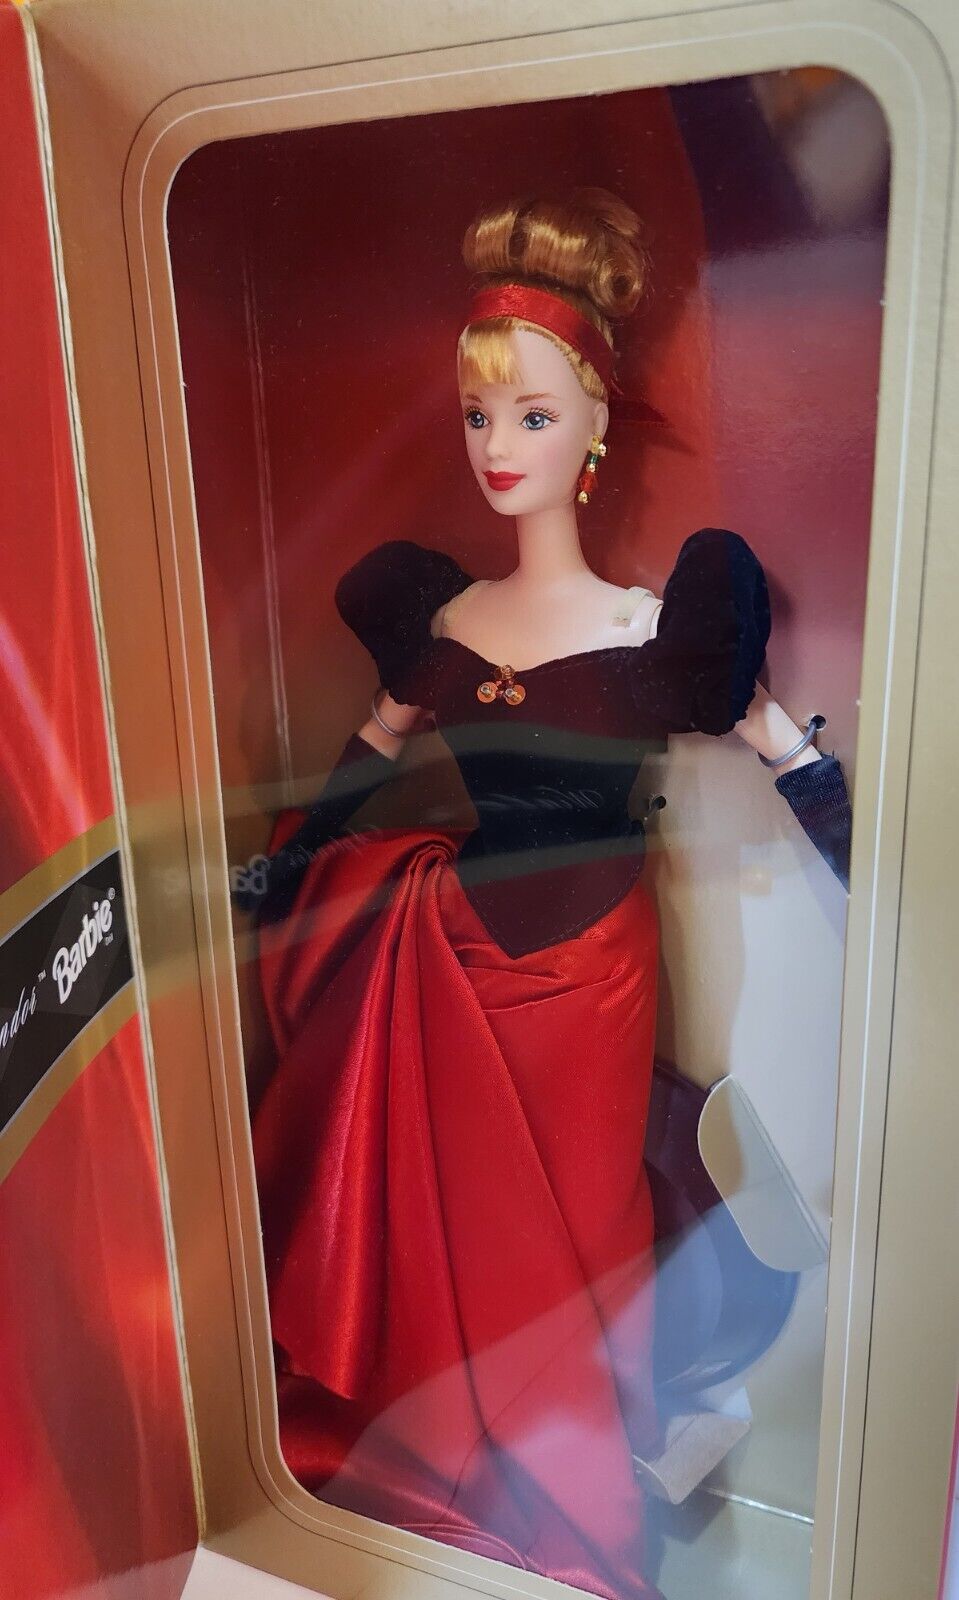 1998 Mattel Winter Splendor Barbie Doll #19357 Avon Exclusive Special Edition